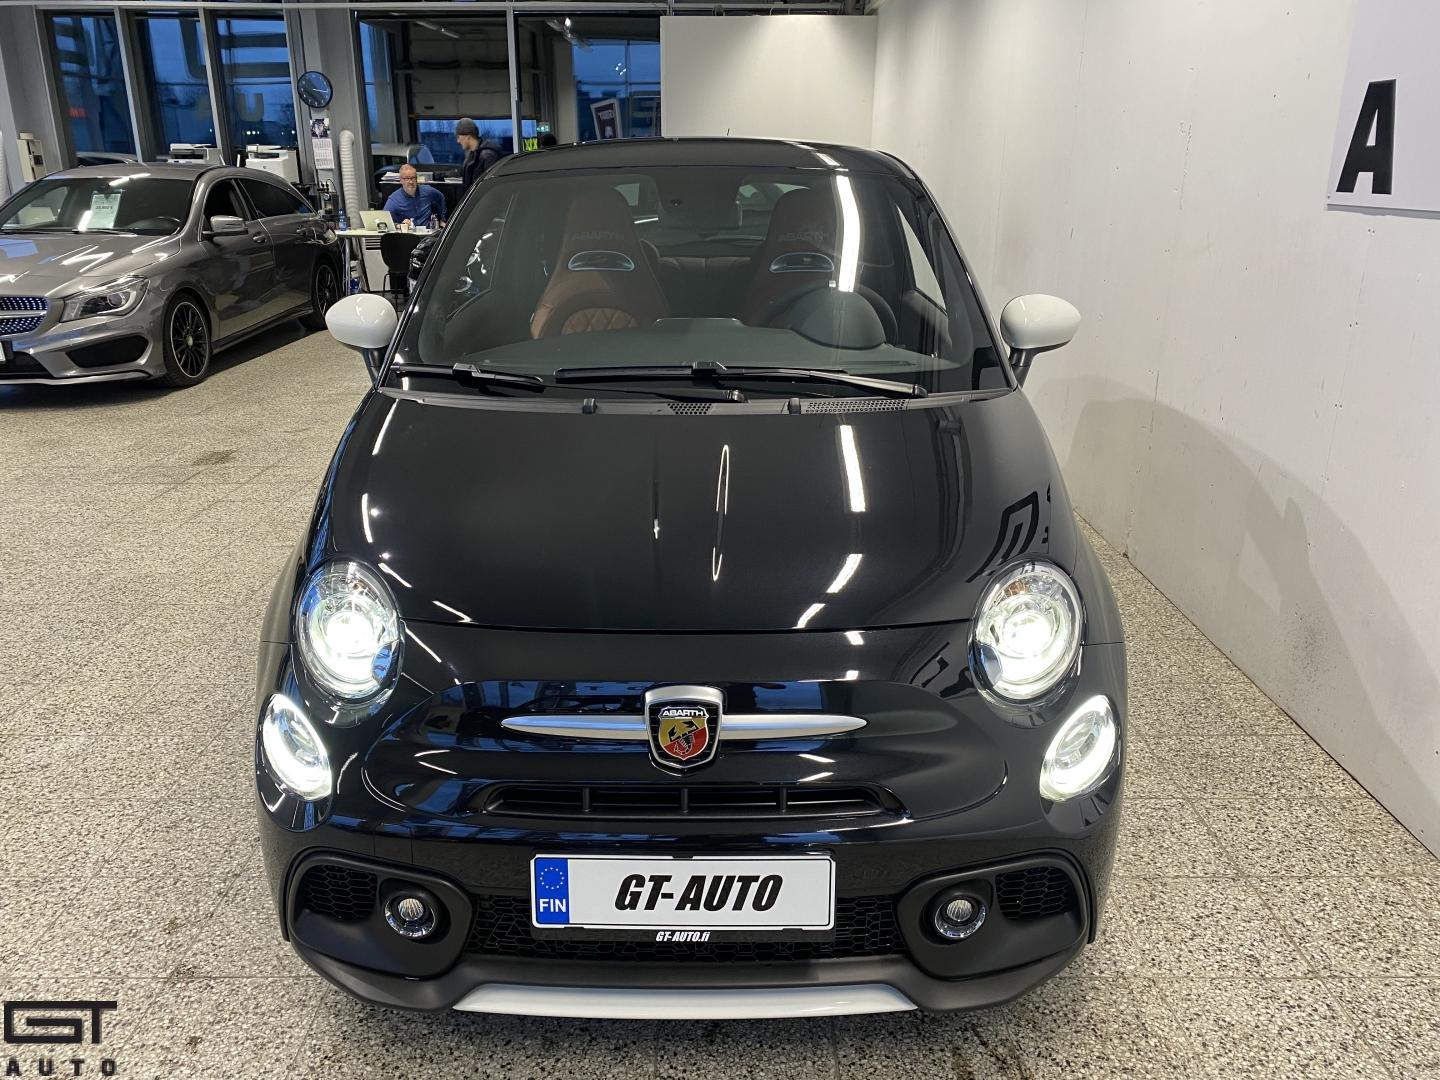 Fiat-Abarth 500